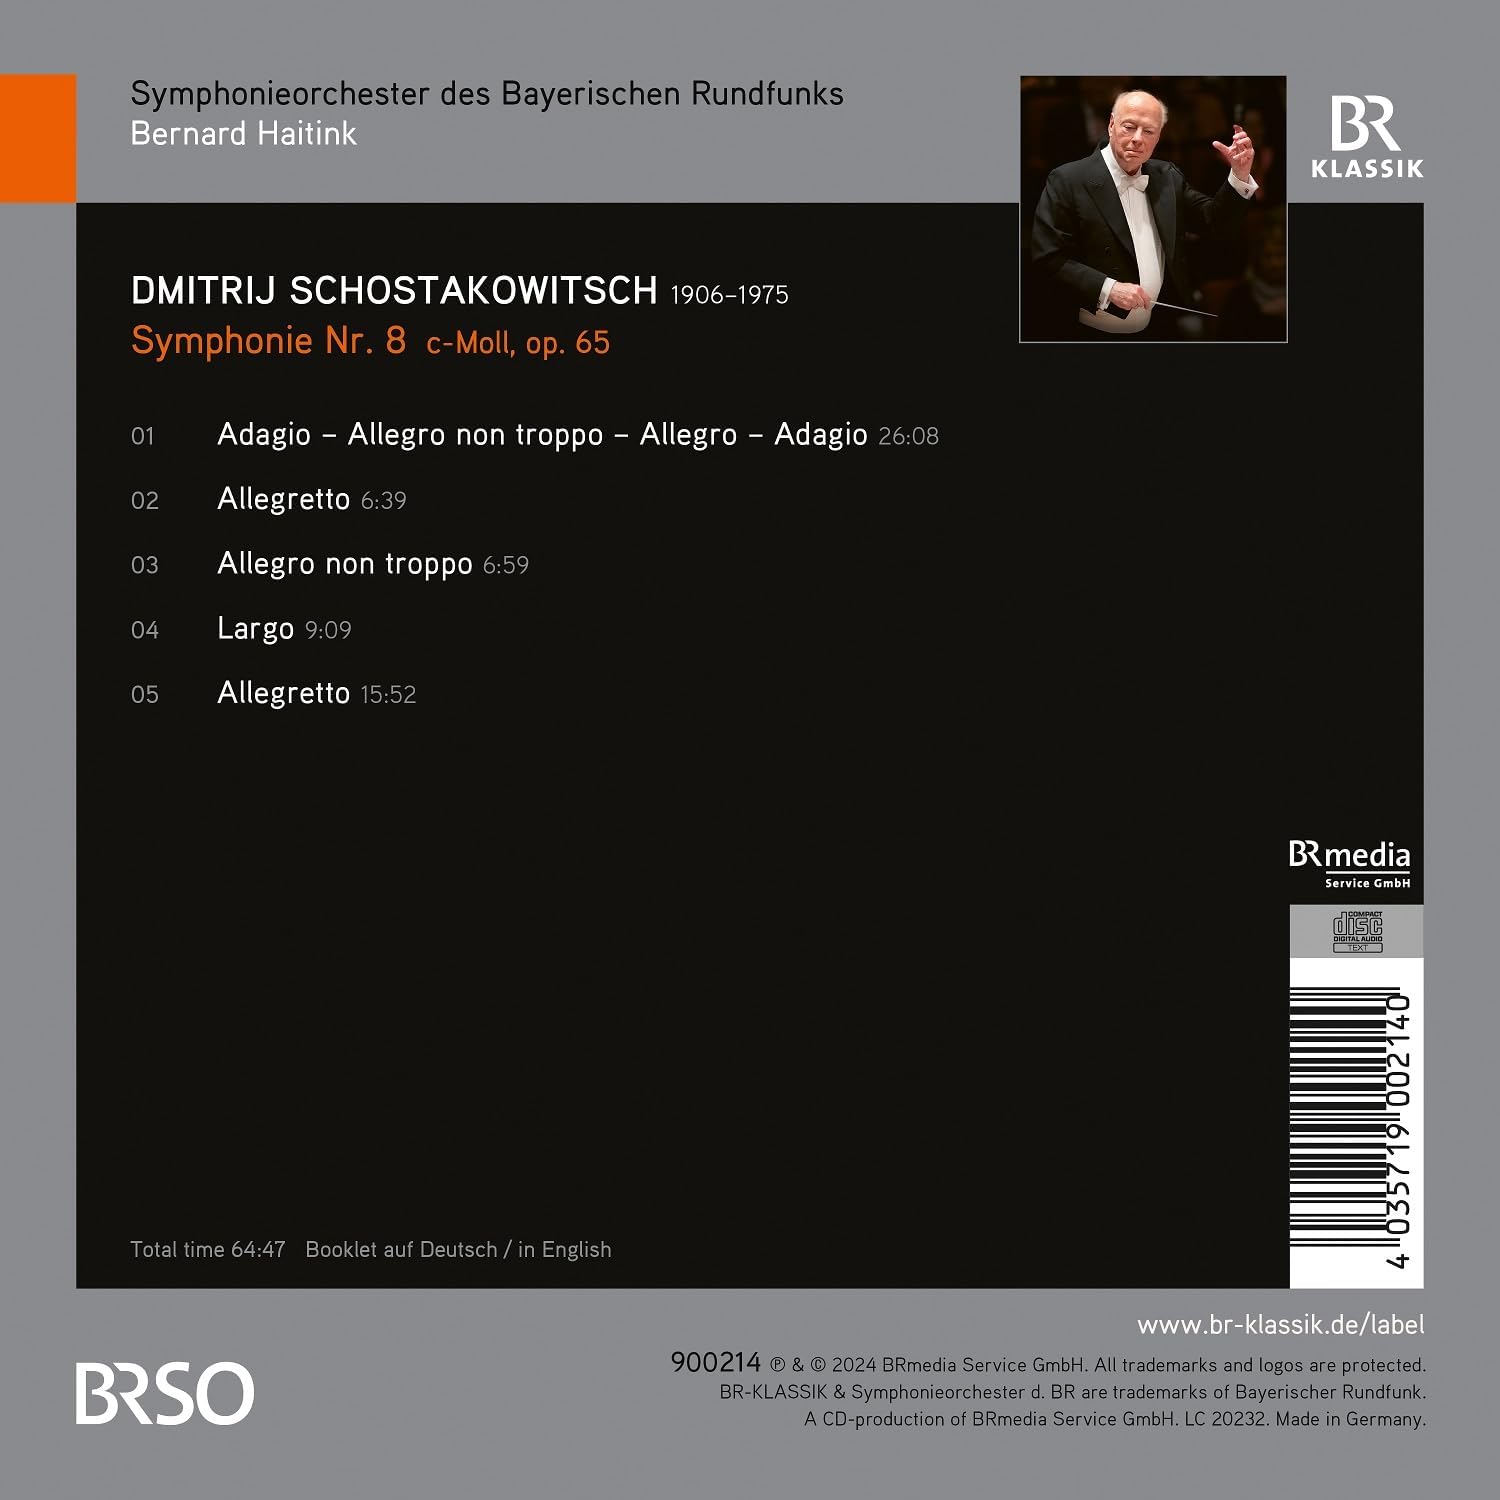 Bernard Haitink 쇼스타코비치: 교향곡 8번 (Shostakovich: Symphony No. 8)